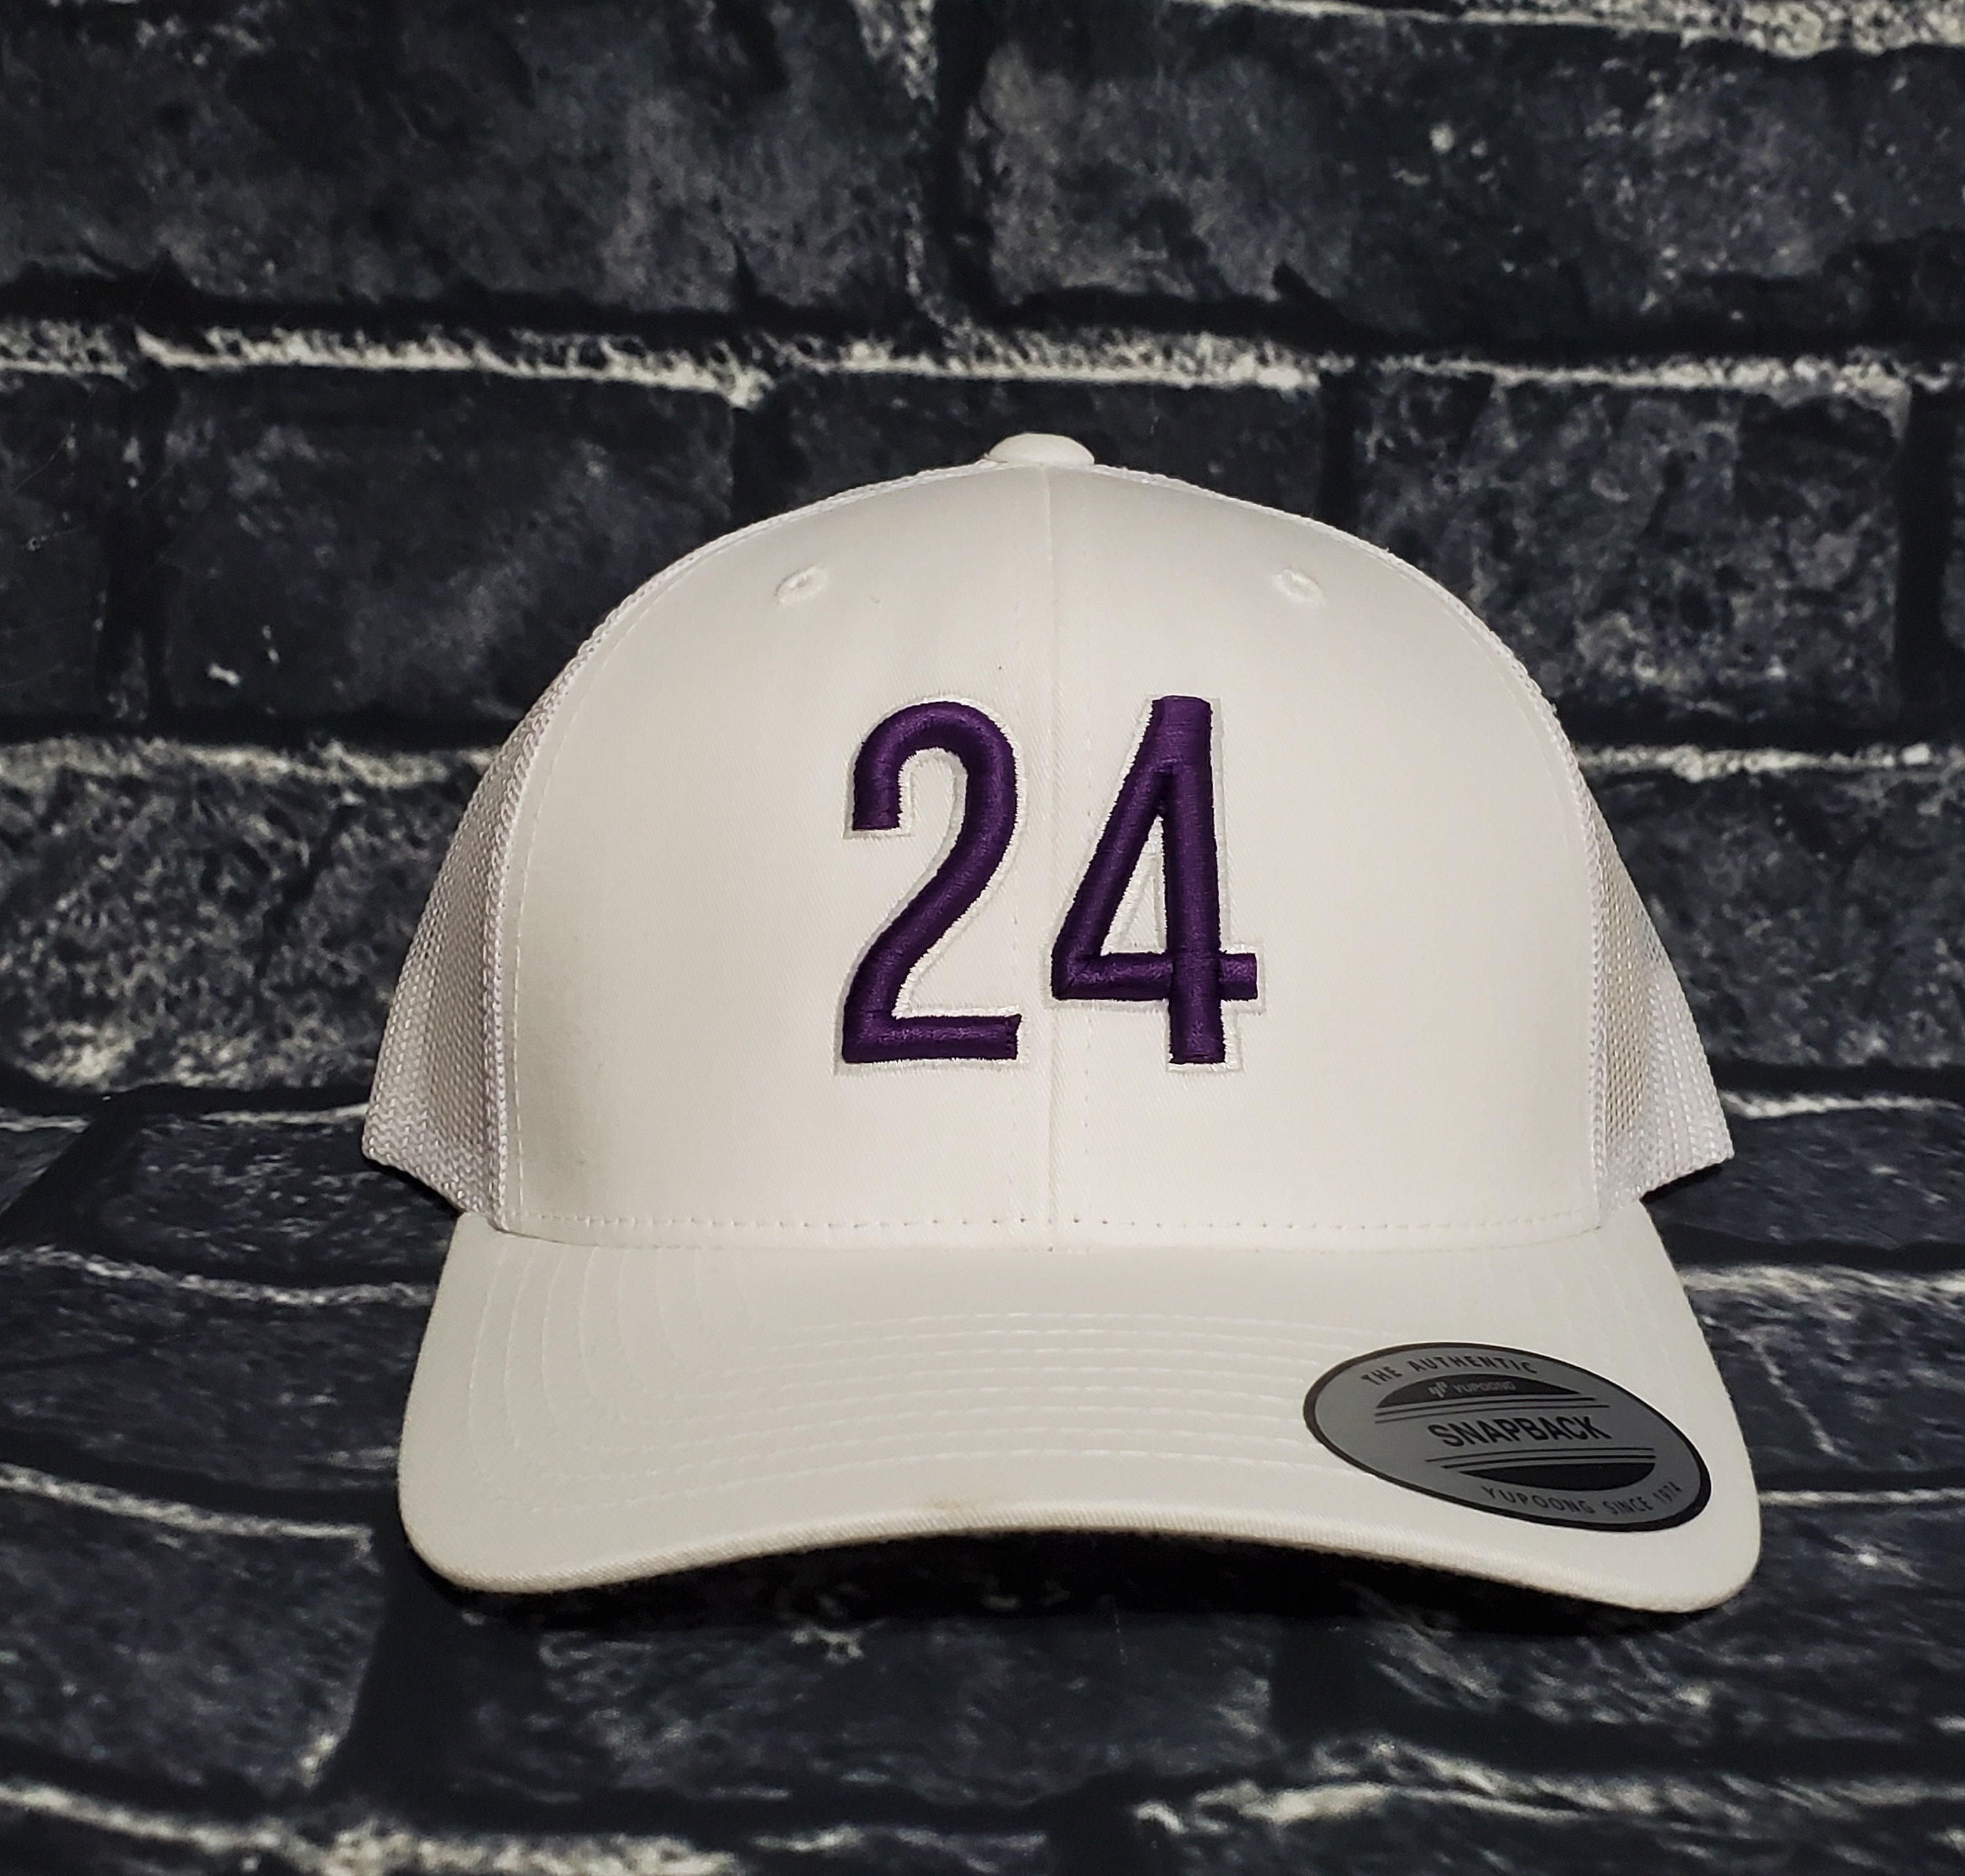 Lakers Bryant 24 Custom Jersey Set – Dakor Only